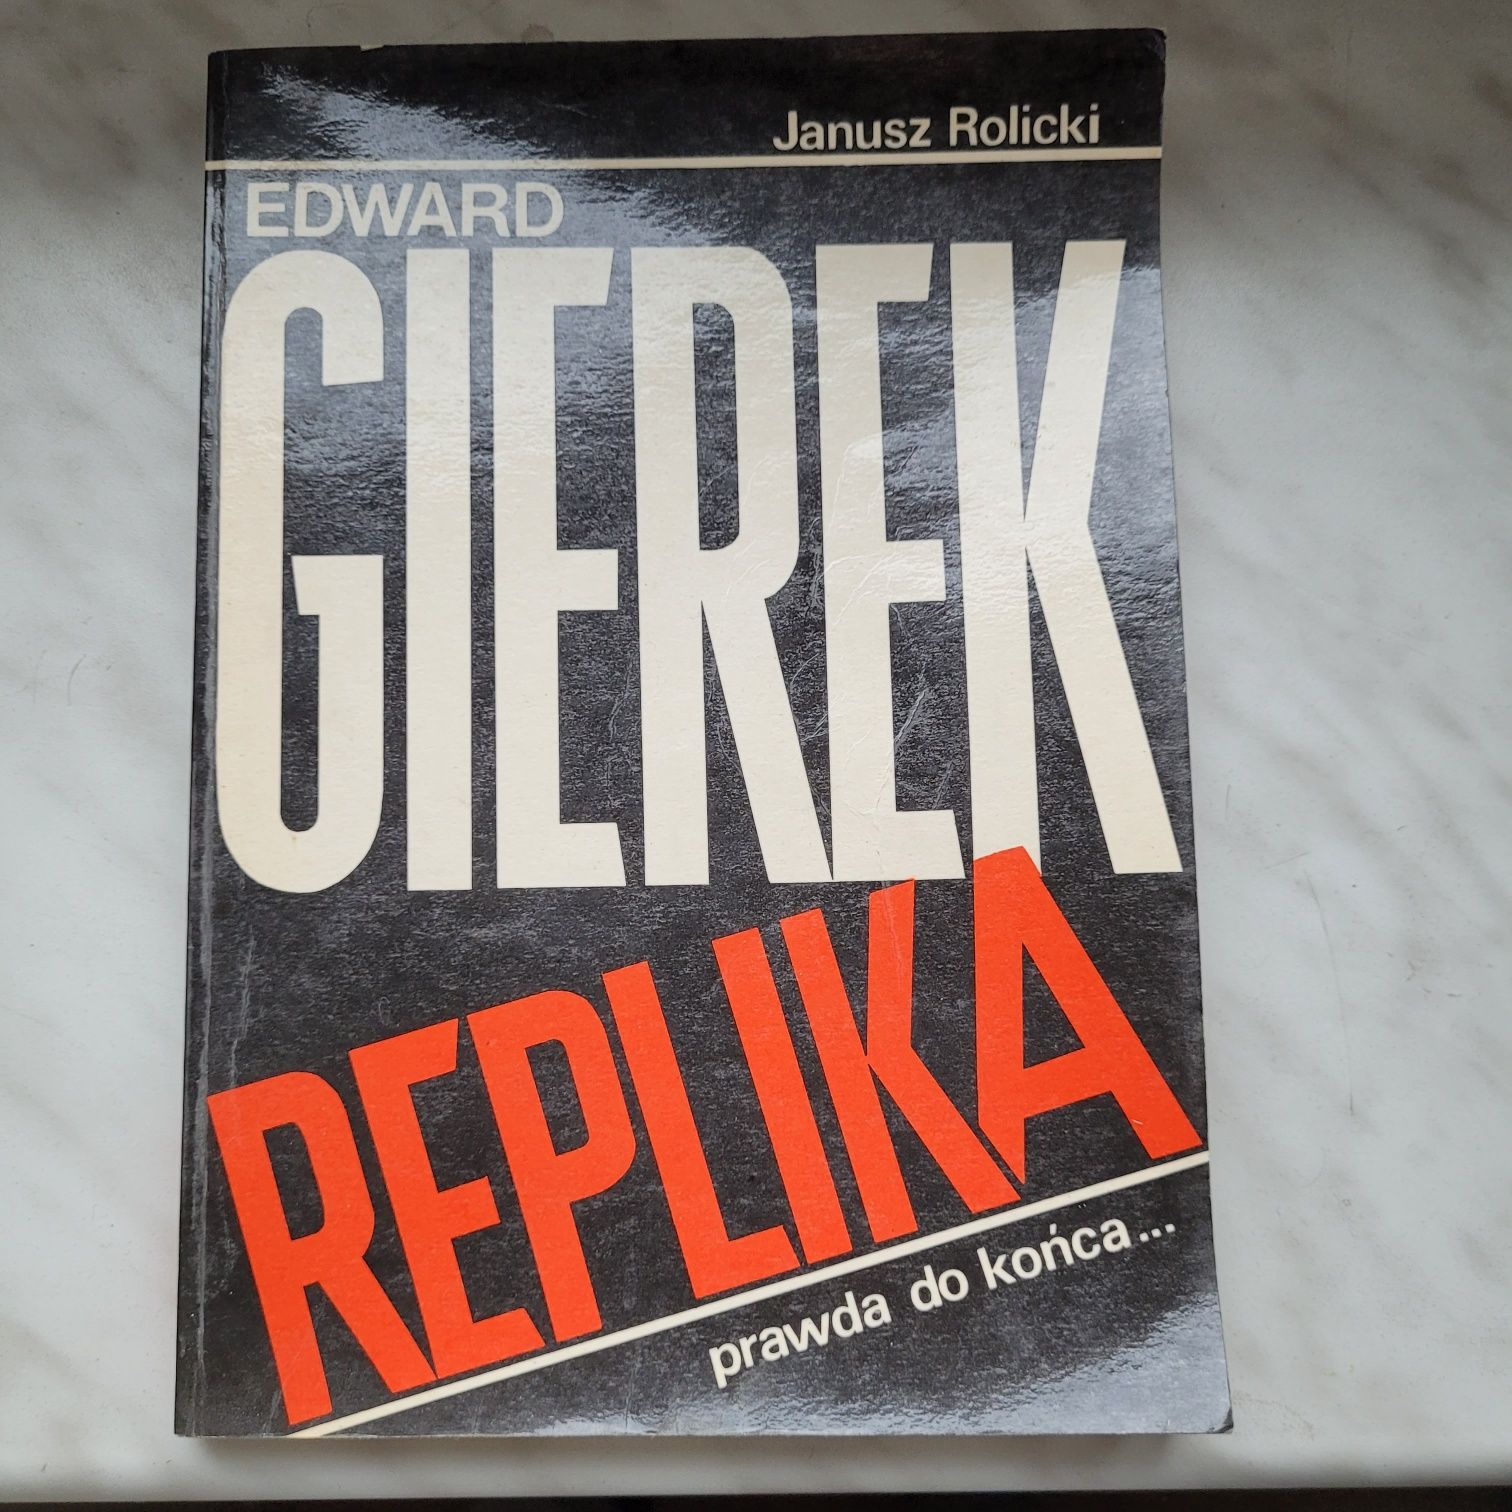 Edward Gierek: Replika książka